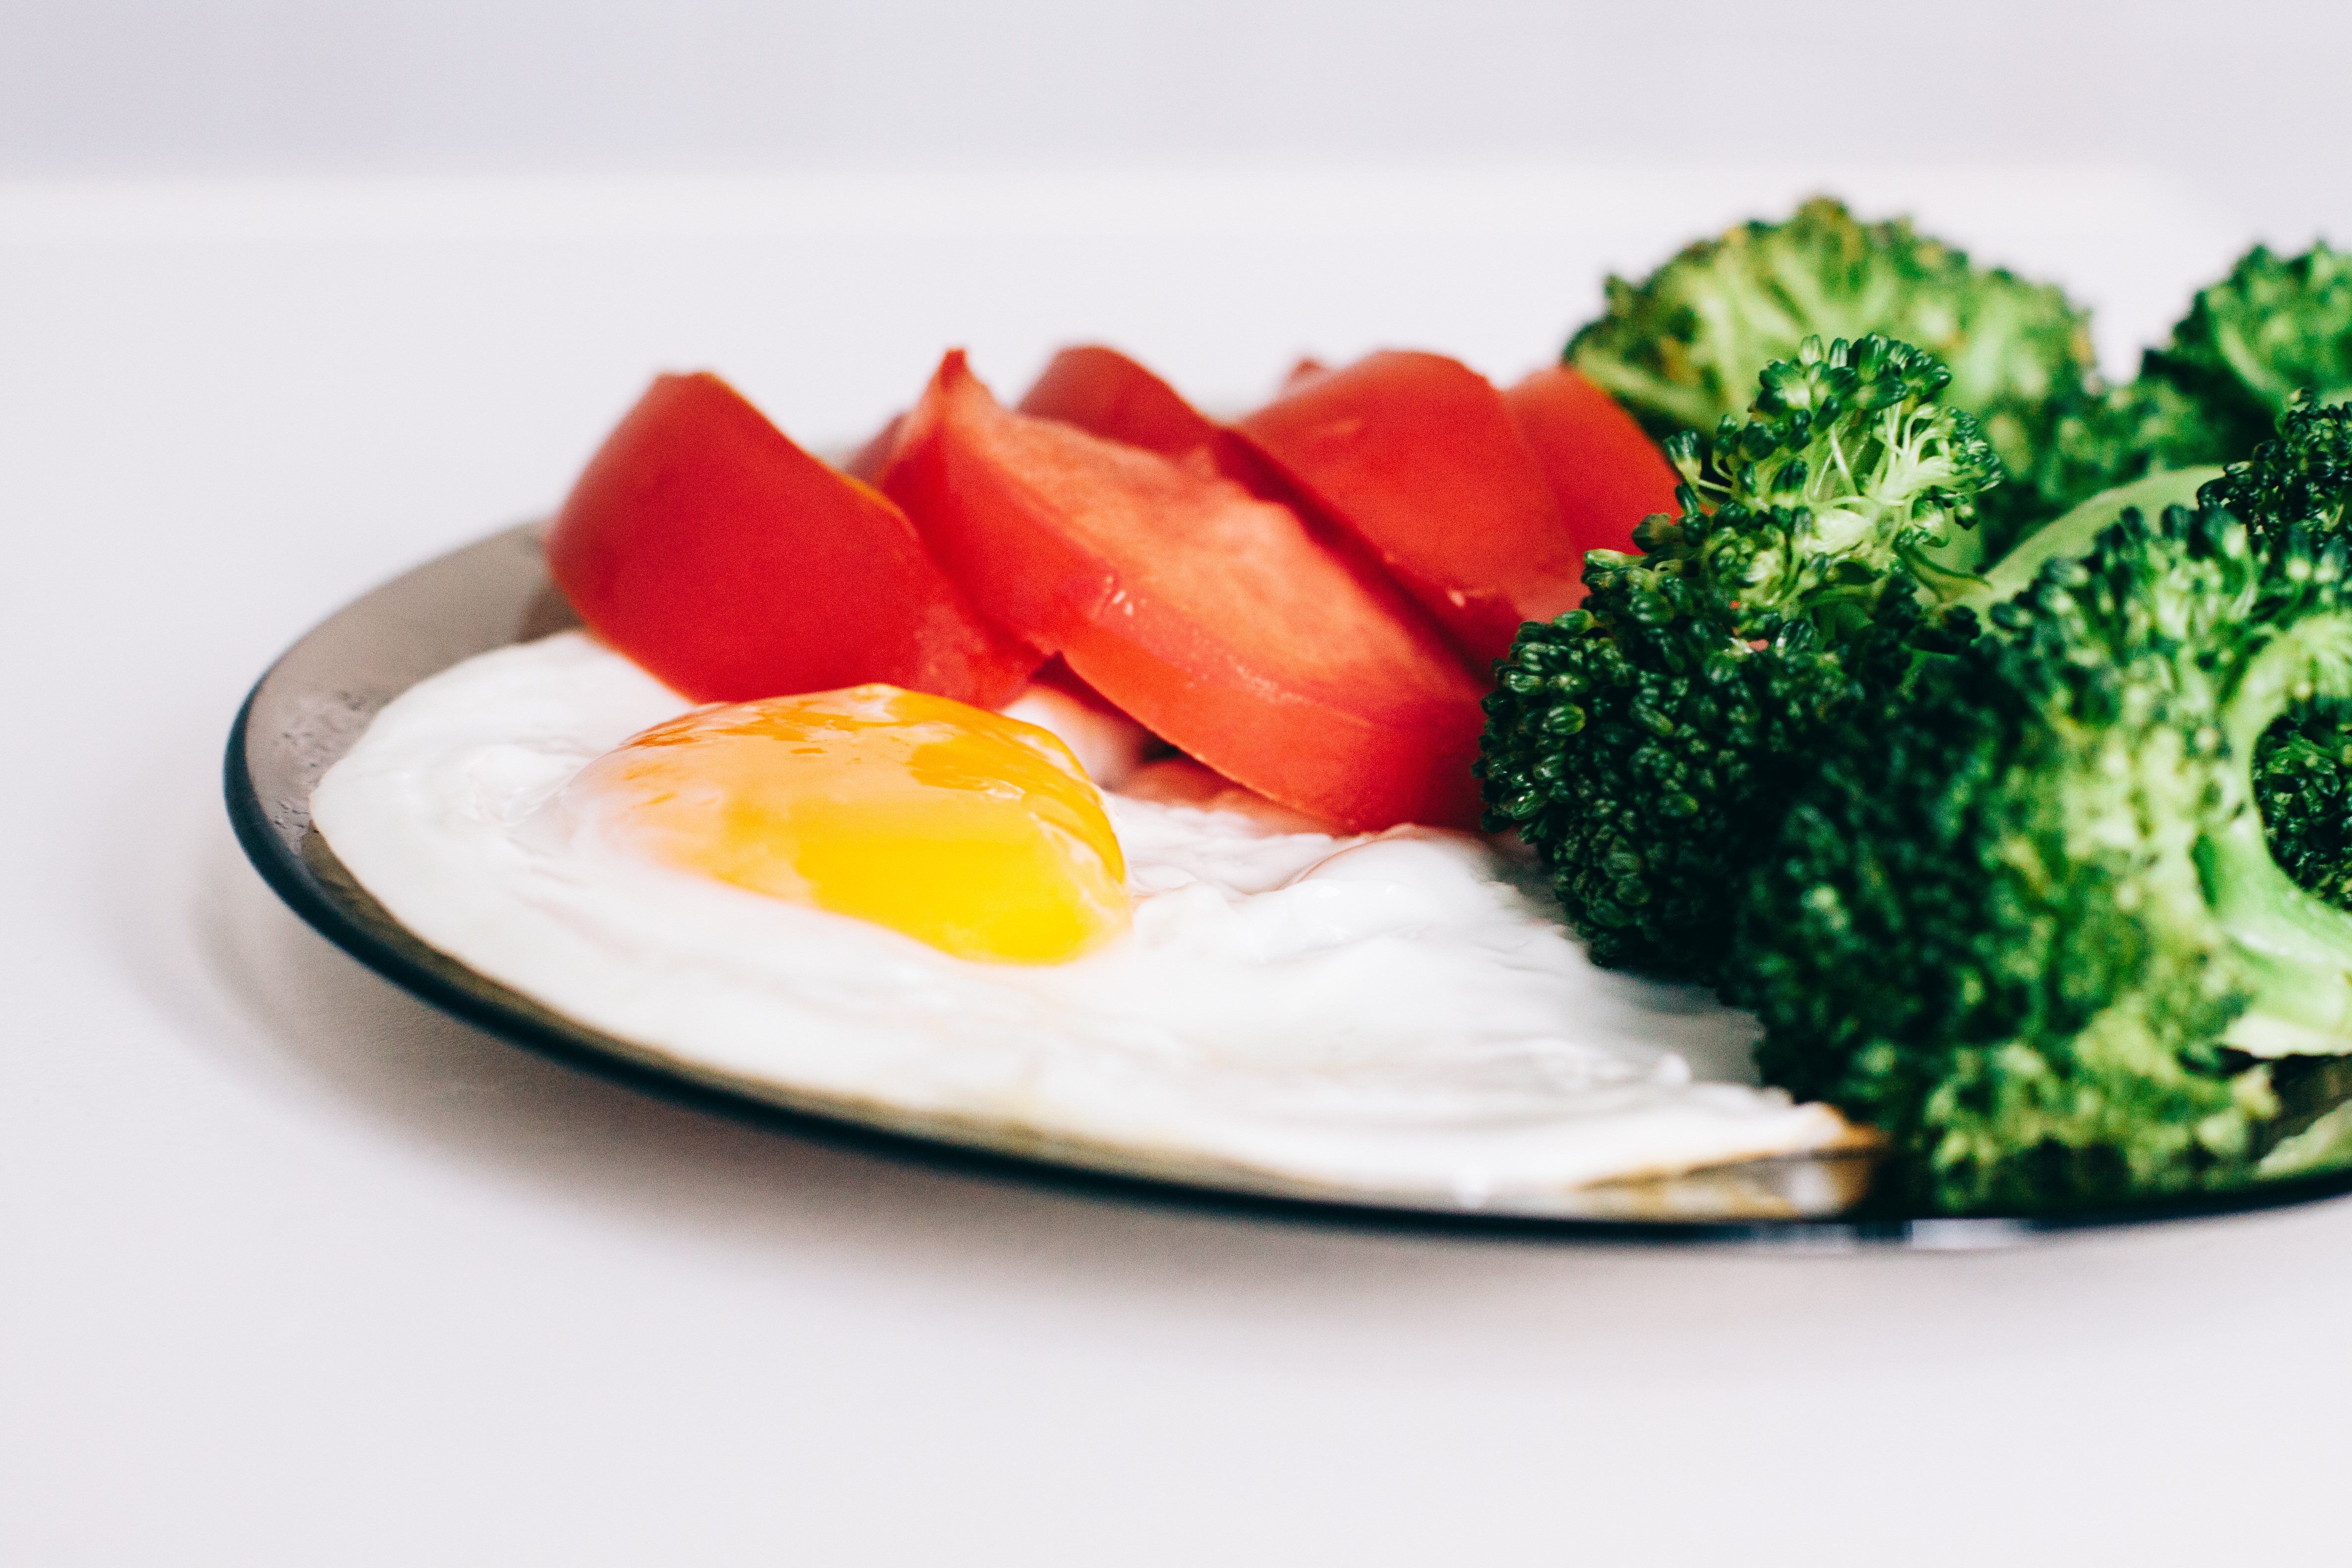 Breakfast of egg, tomato and broccoli